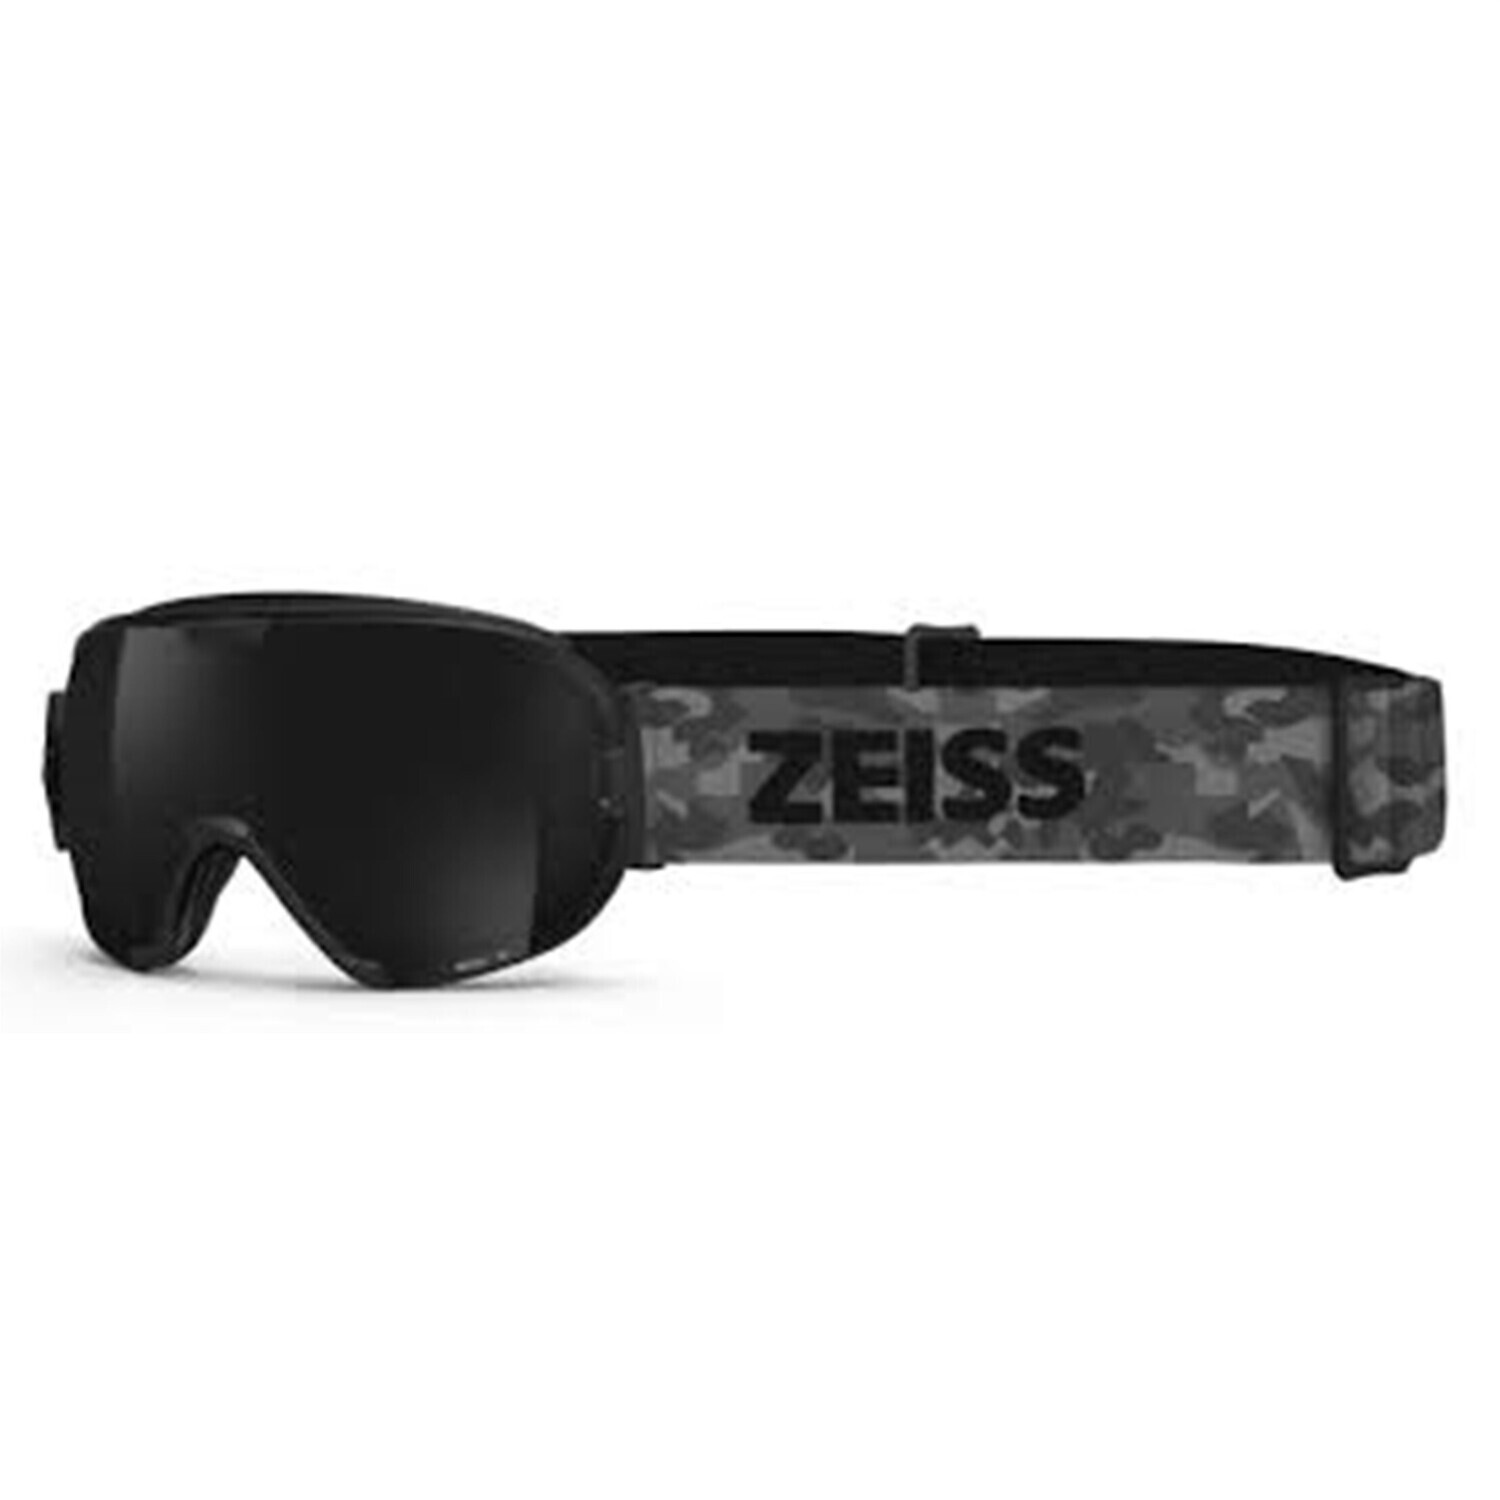 Zeiss snow goggle interchangeable black - grey